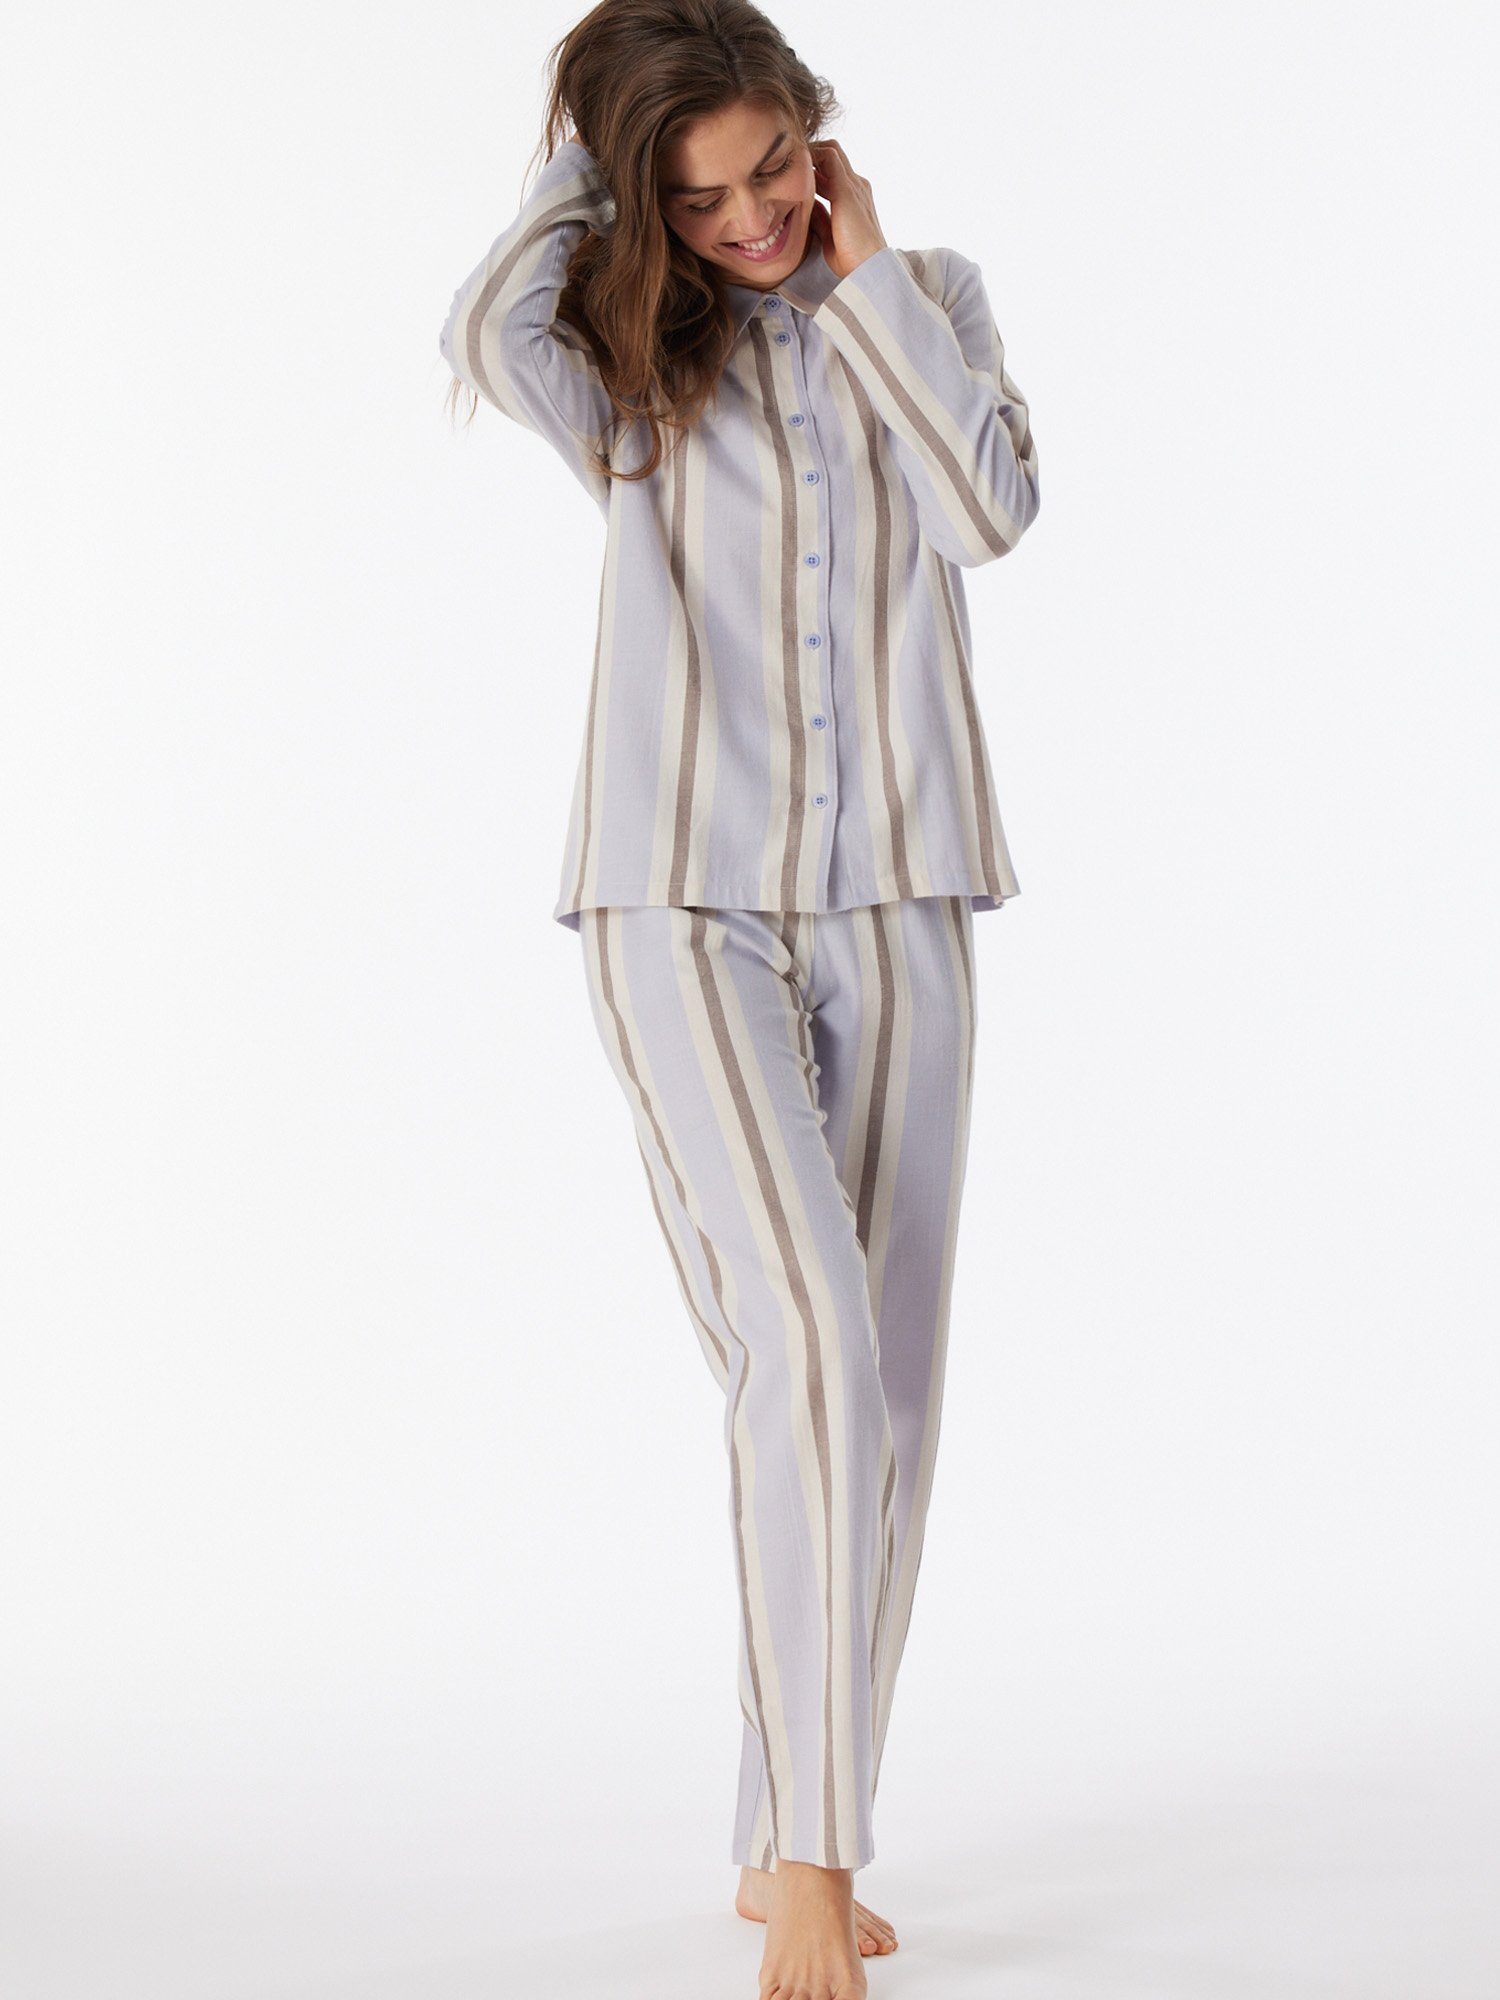 schlafanzug pyjama Premium Selected Pyjama flieder Schiesser schlafmode